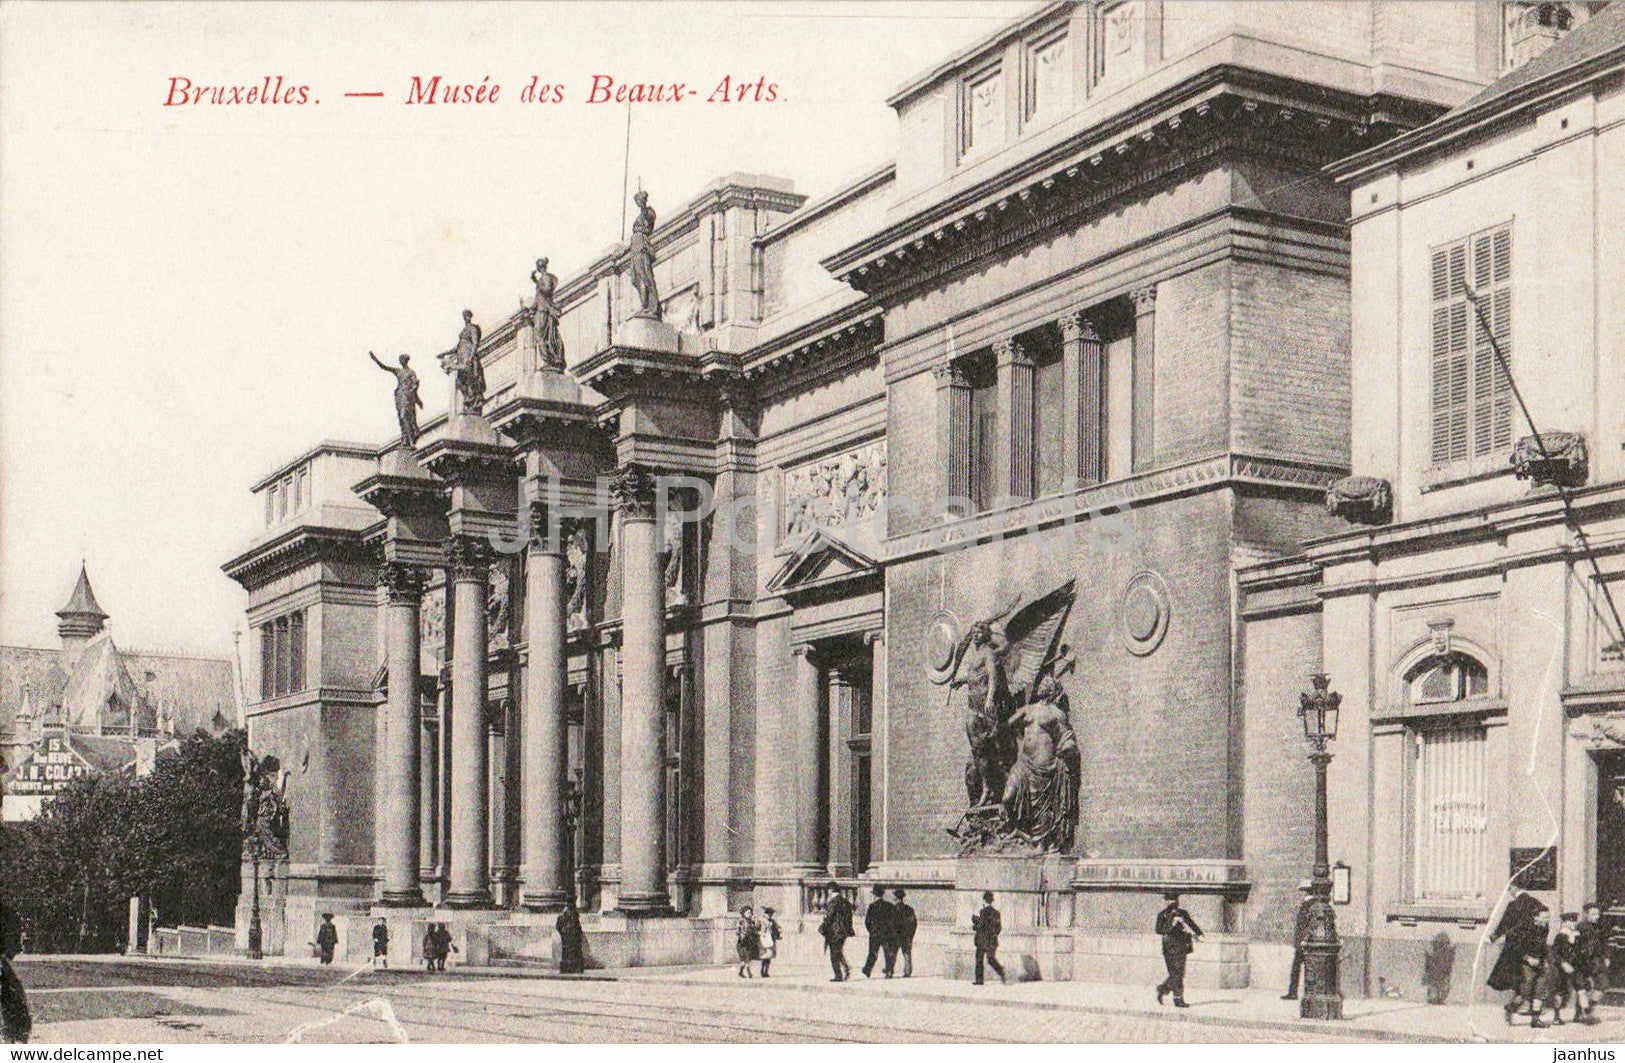 Bruxelles - Brussels - Musee des Beaux Arts - museum - old postcard - Belgium - unused - JH Postcards